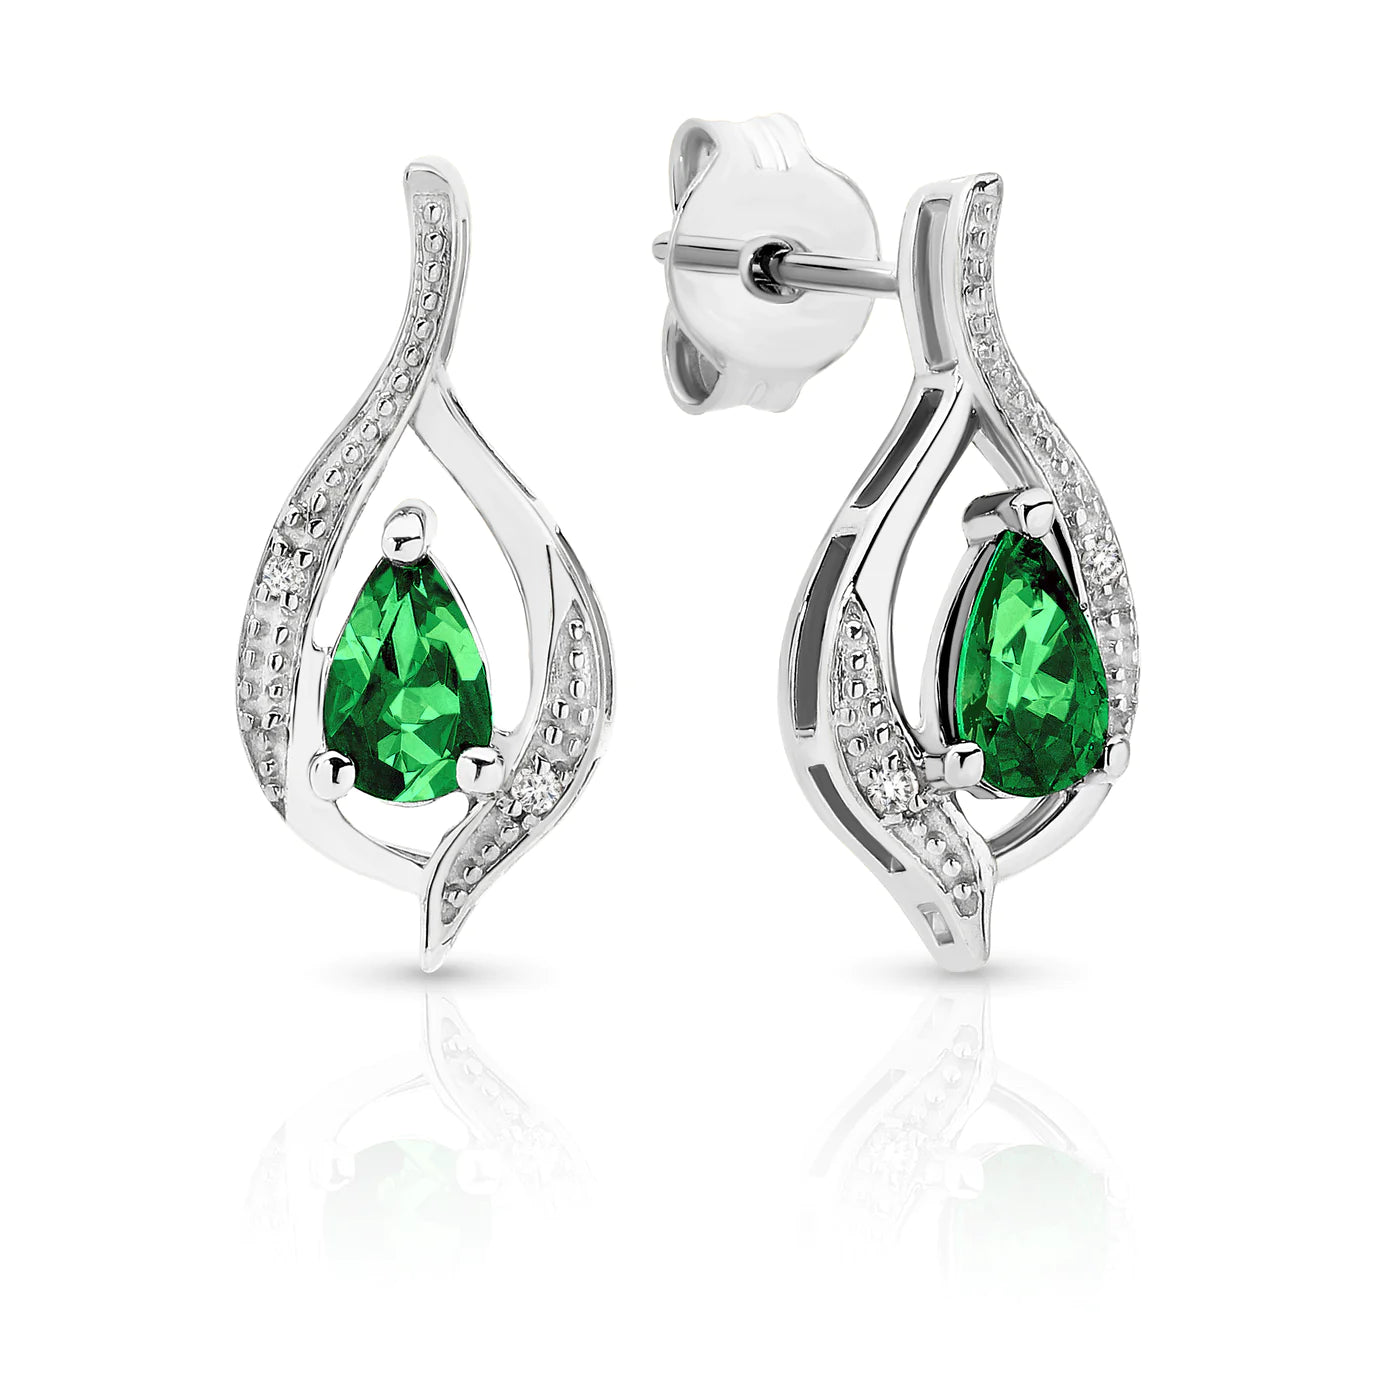 9ct white gold cr emerald & diamond earrings